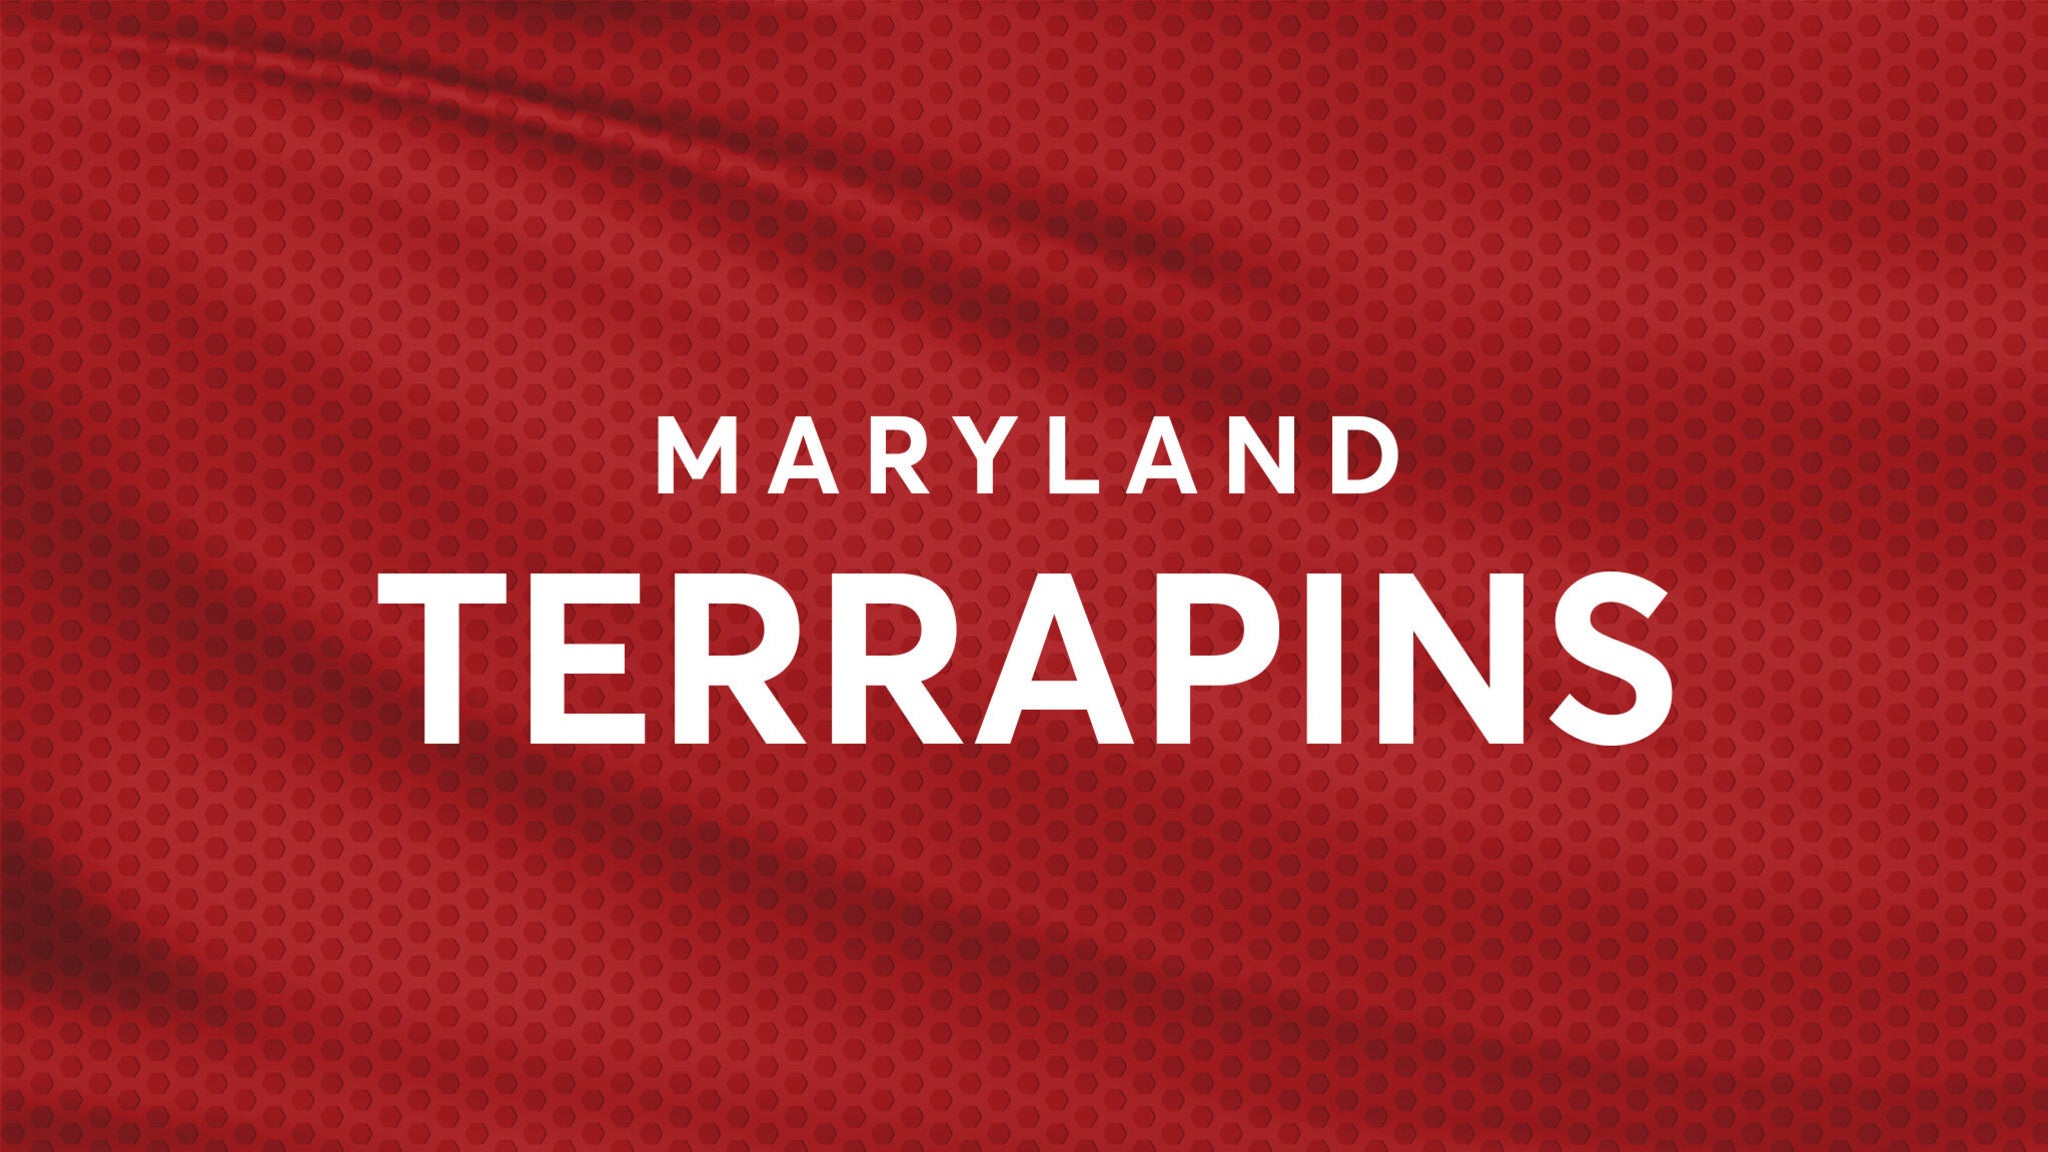 Maryland Terrapins Mens Basketball vs. Penn State Nittany Lions Mens Basketball